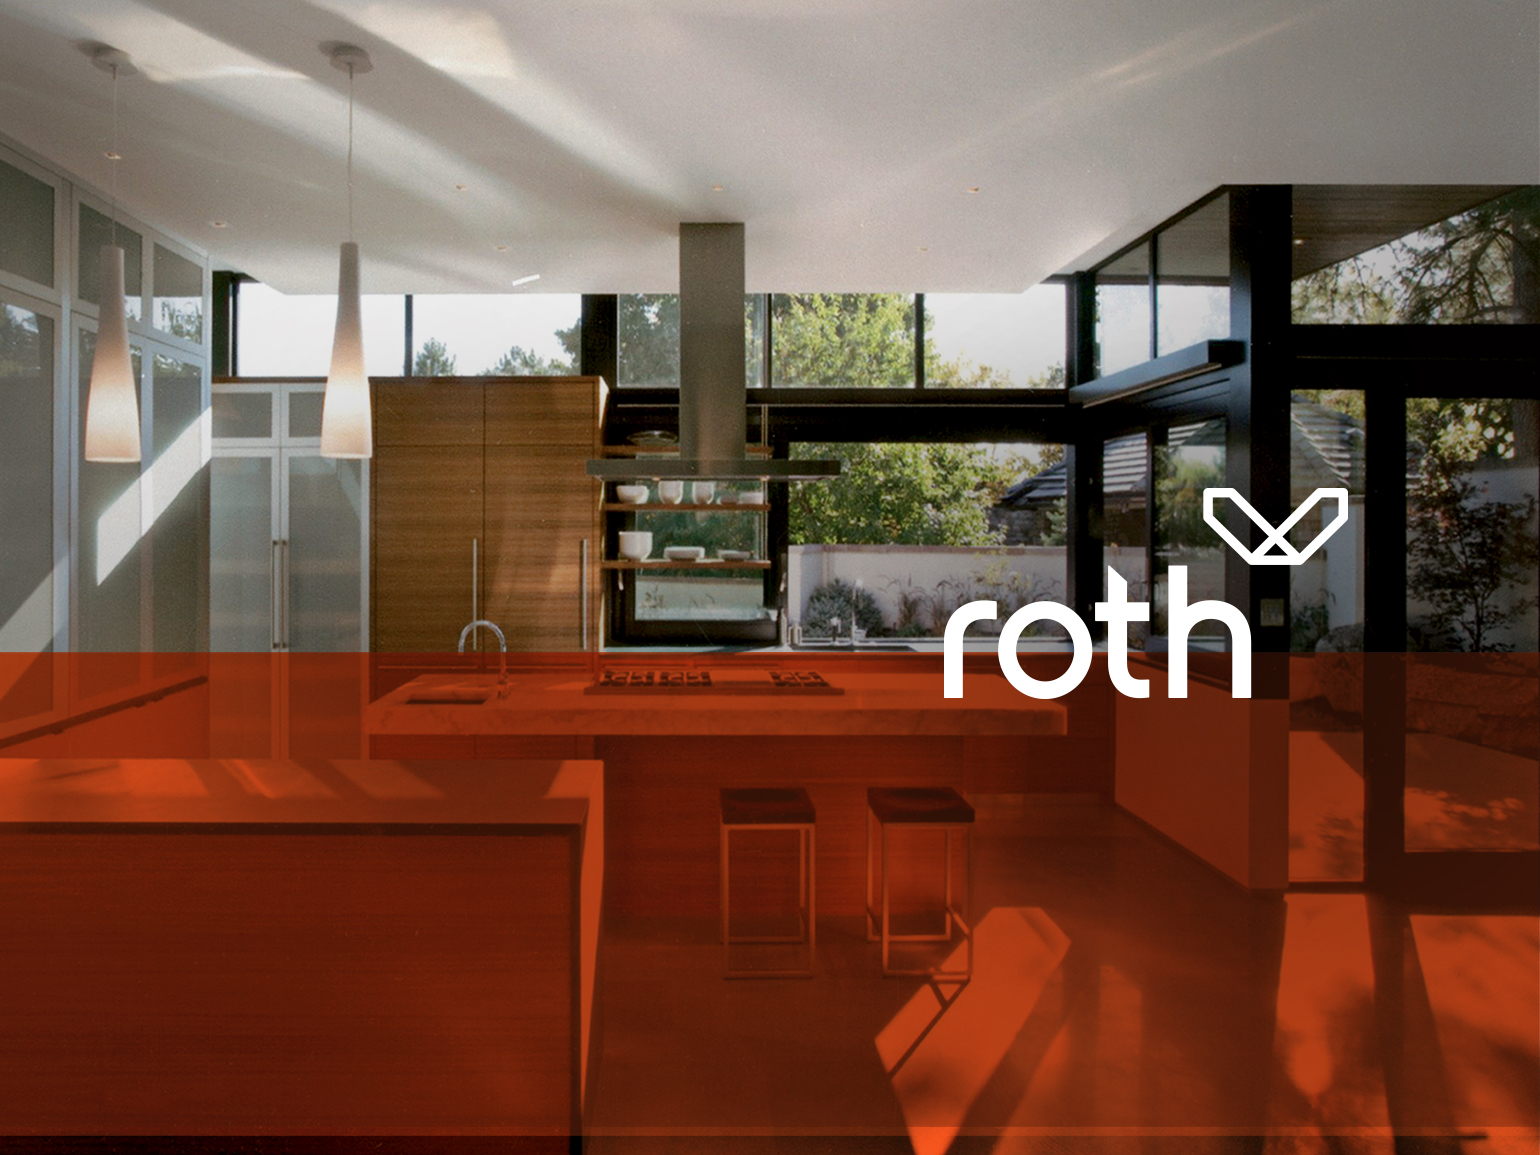 Roth Identity 1